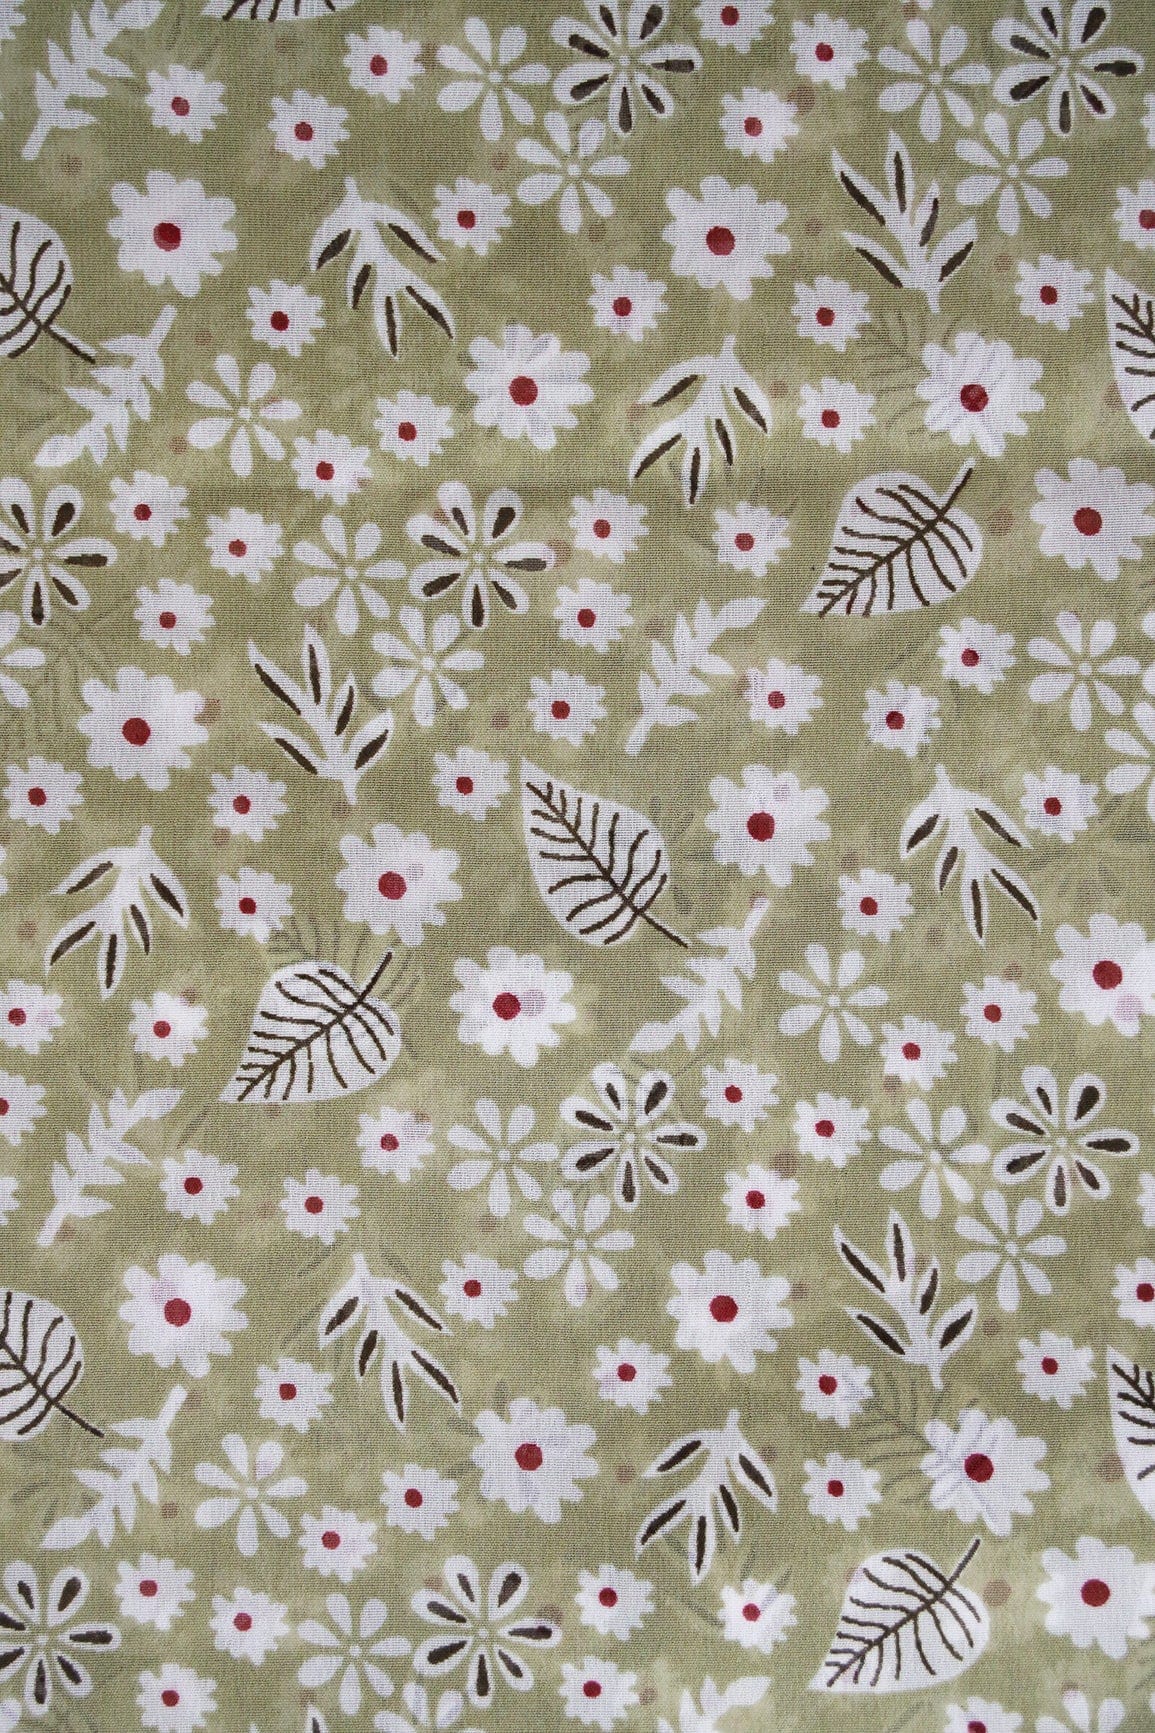 doeraa Prints Big Width "56" White Small Floral Digital Print On Light Olive Georgette Fabric